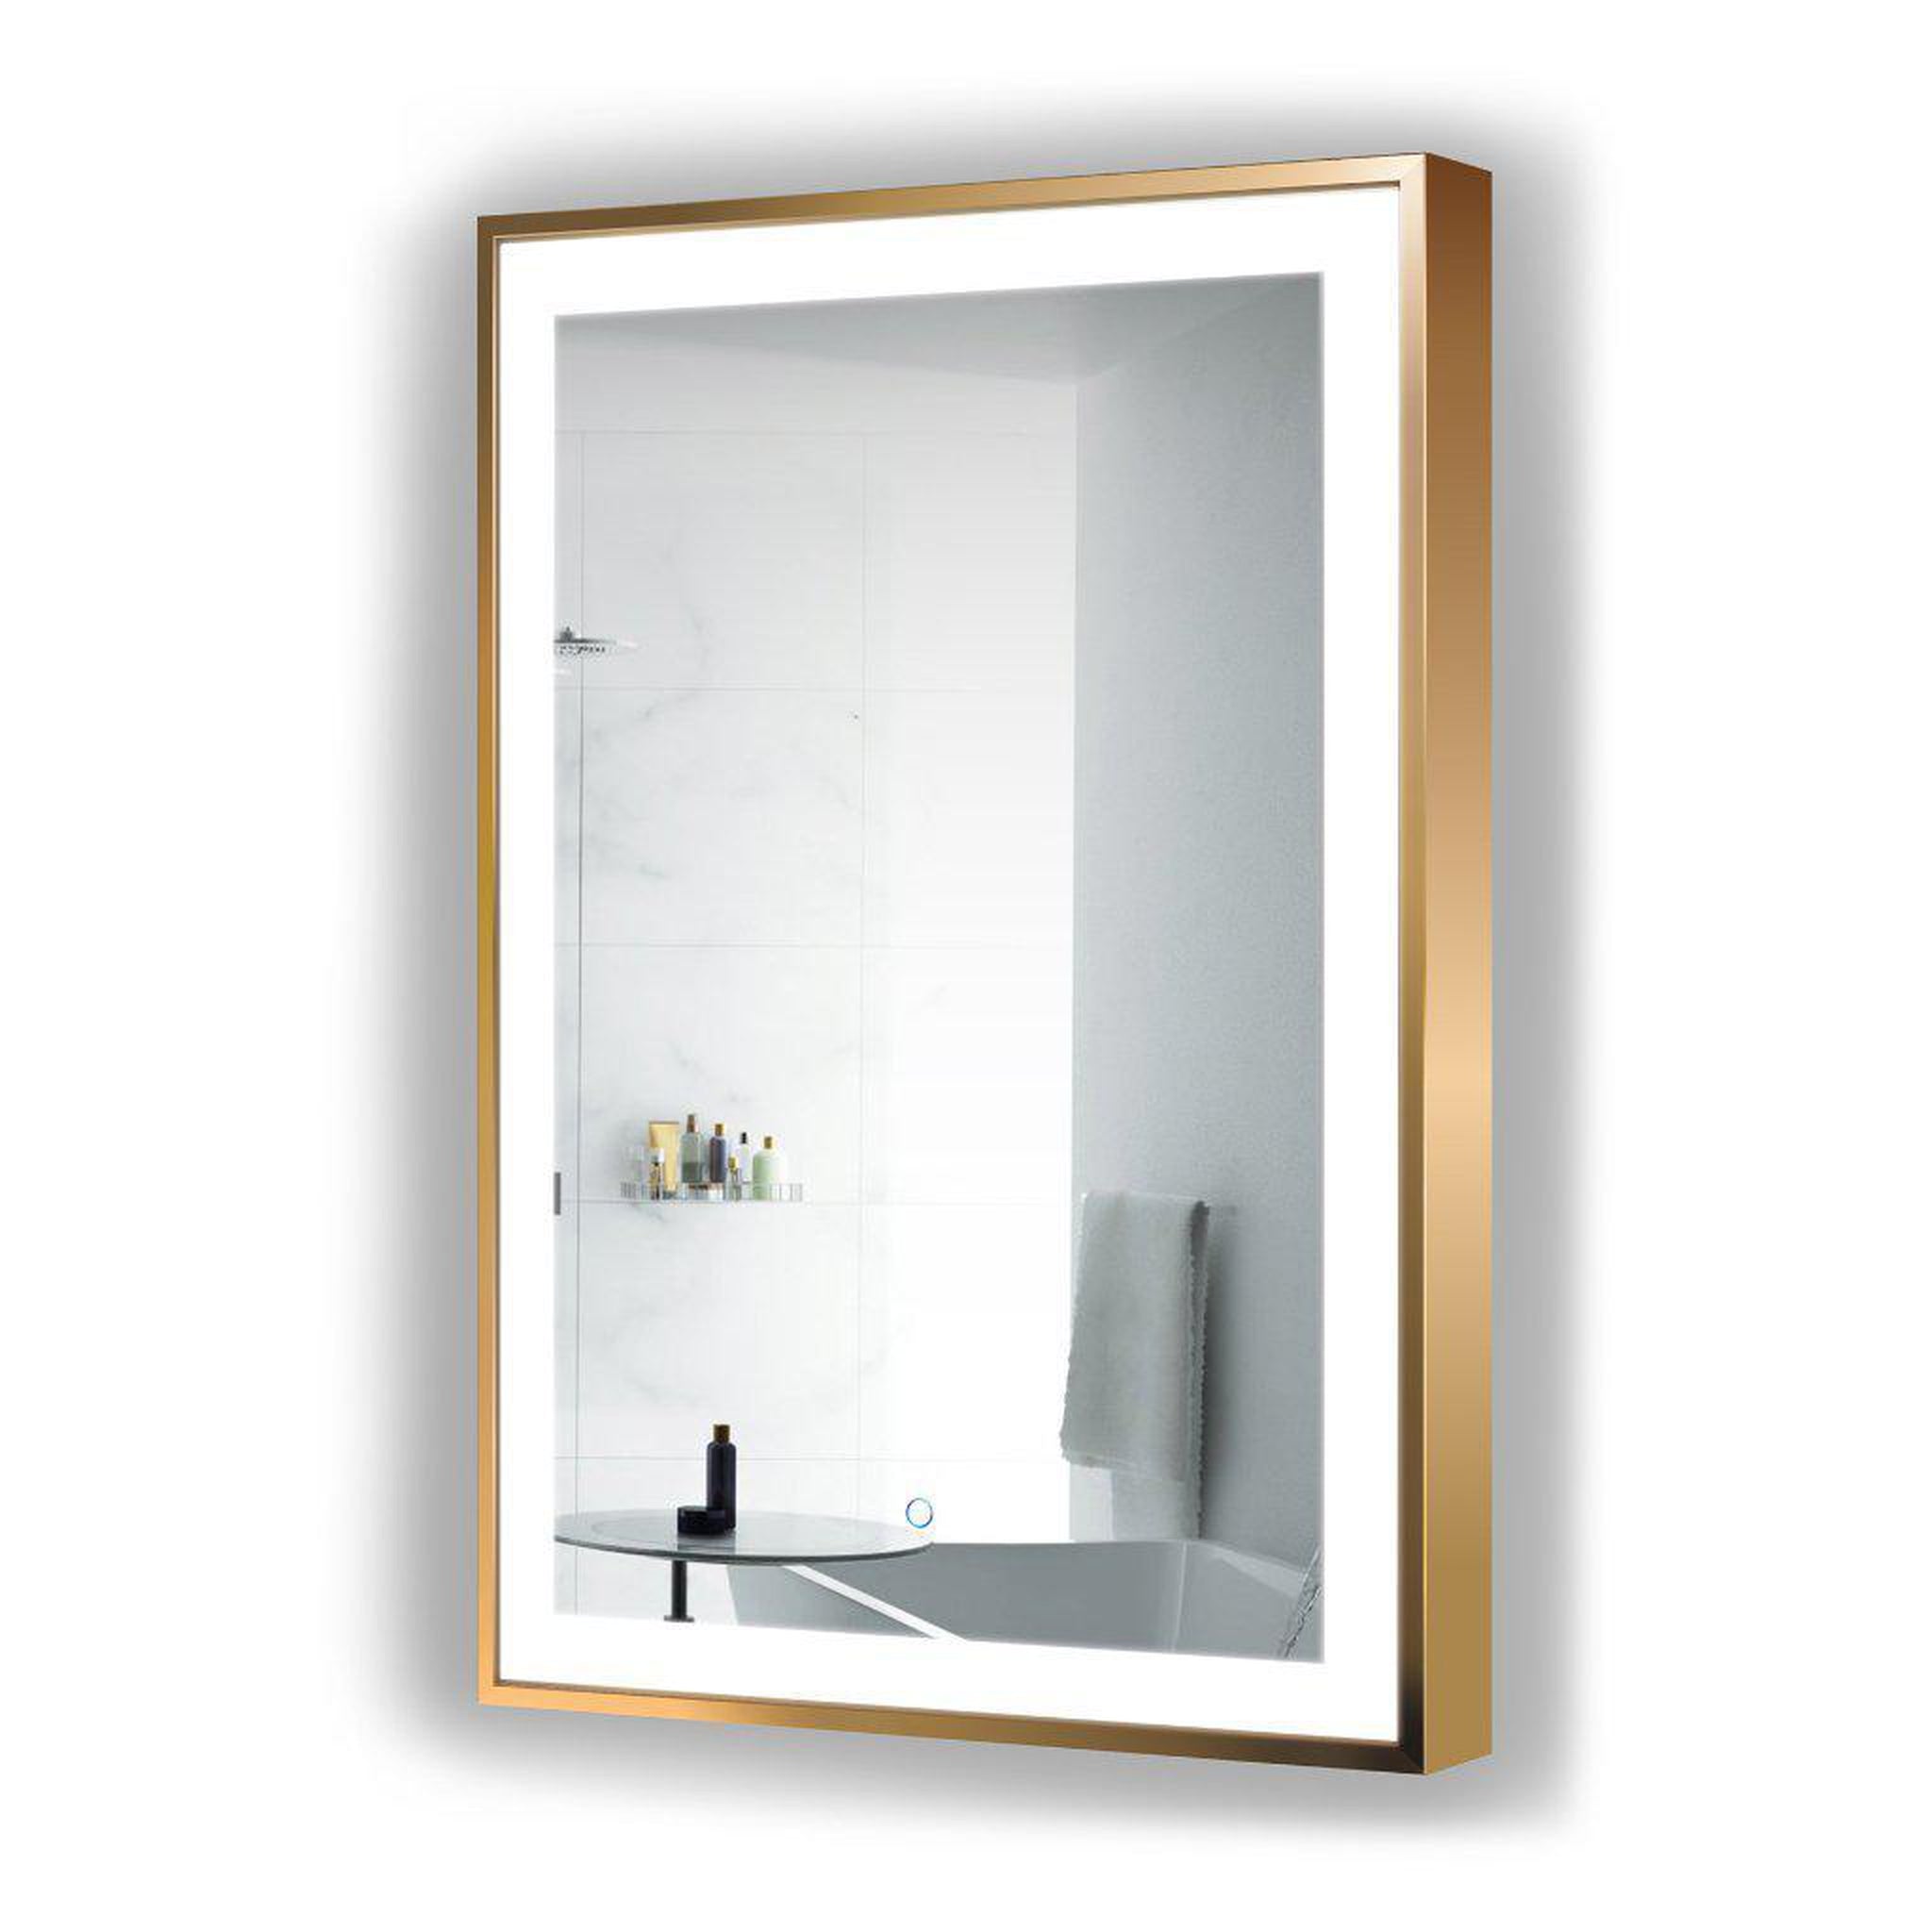 Krugg Reflections, Krugg Reflections Soho 24" x 36" 5000K Rectangular Matte Gold Wall-Mounted Framed LED Bathroom Vanity Mirror With Built-in Defogger and Dimmer